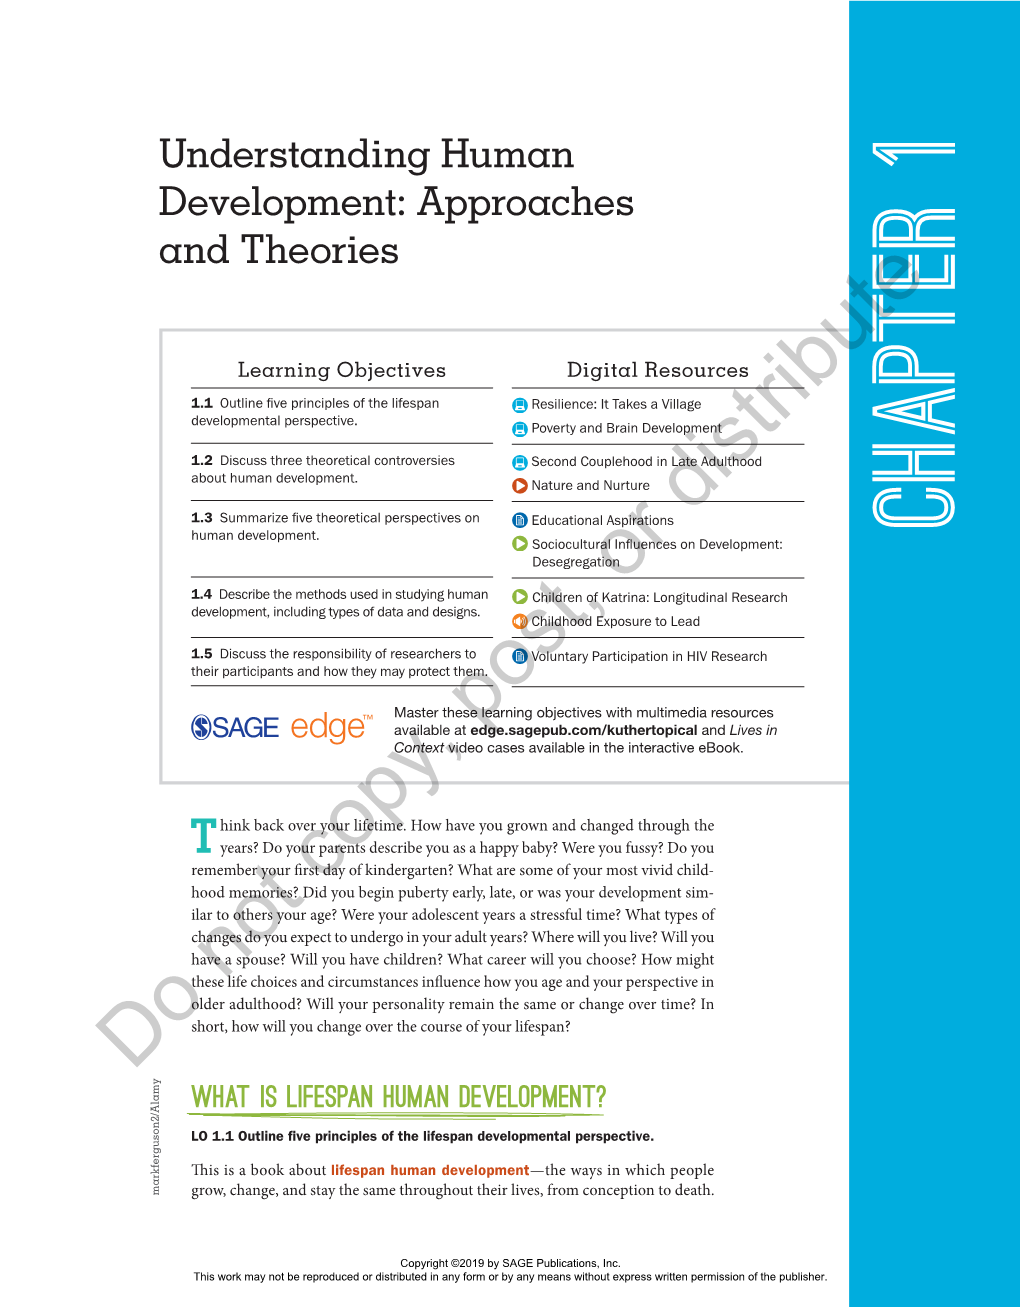 Understanding Human Development: Approaches and Theories